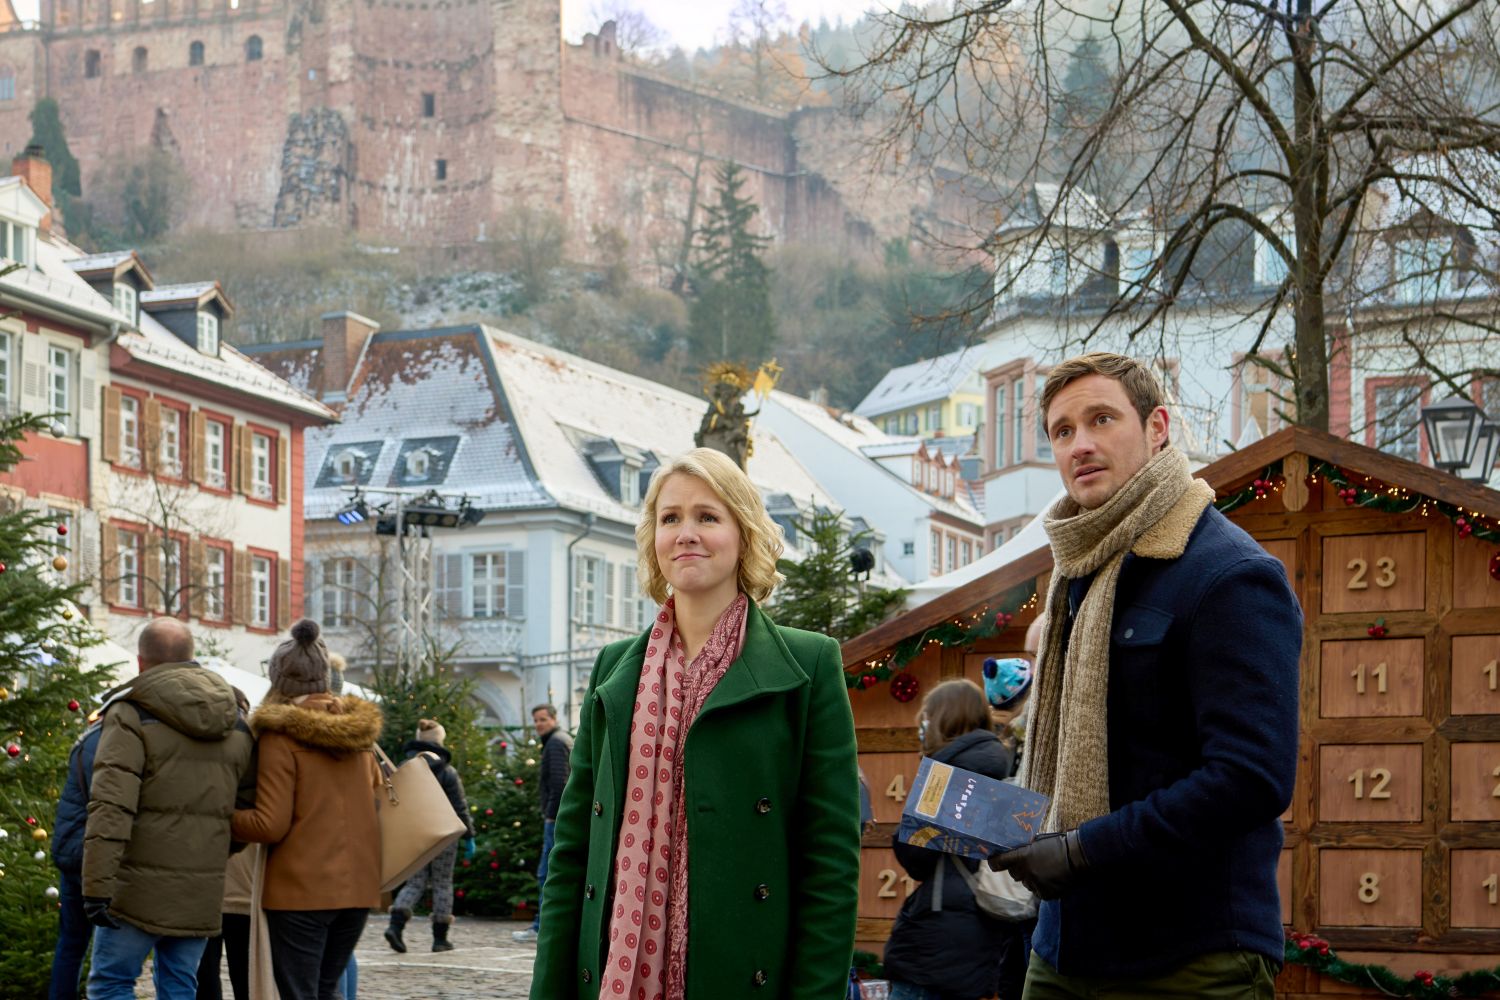 A Heidelberg Holiday on Hallmark Channel